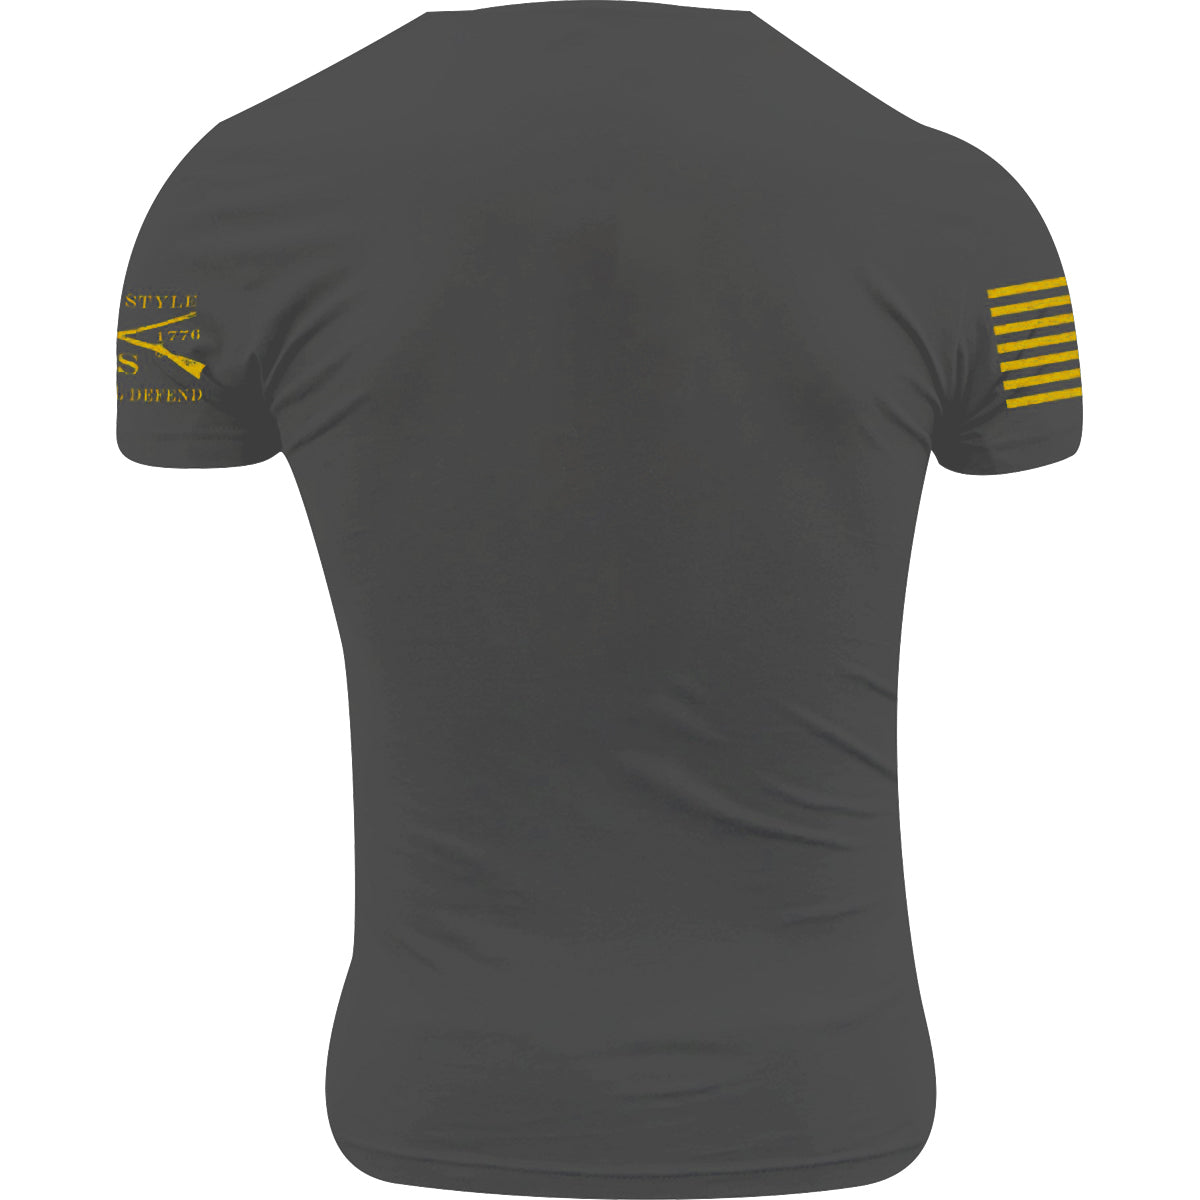 Grunt Style USMC - Rock T-Shirt - Gray Grunt Style